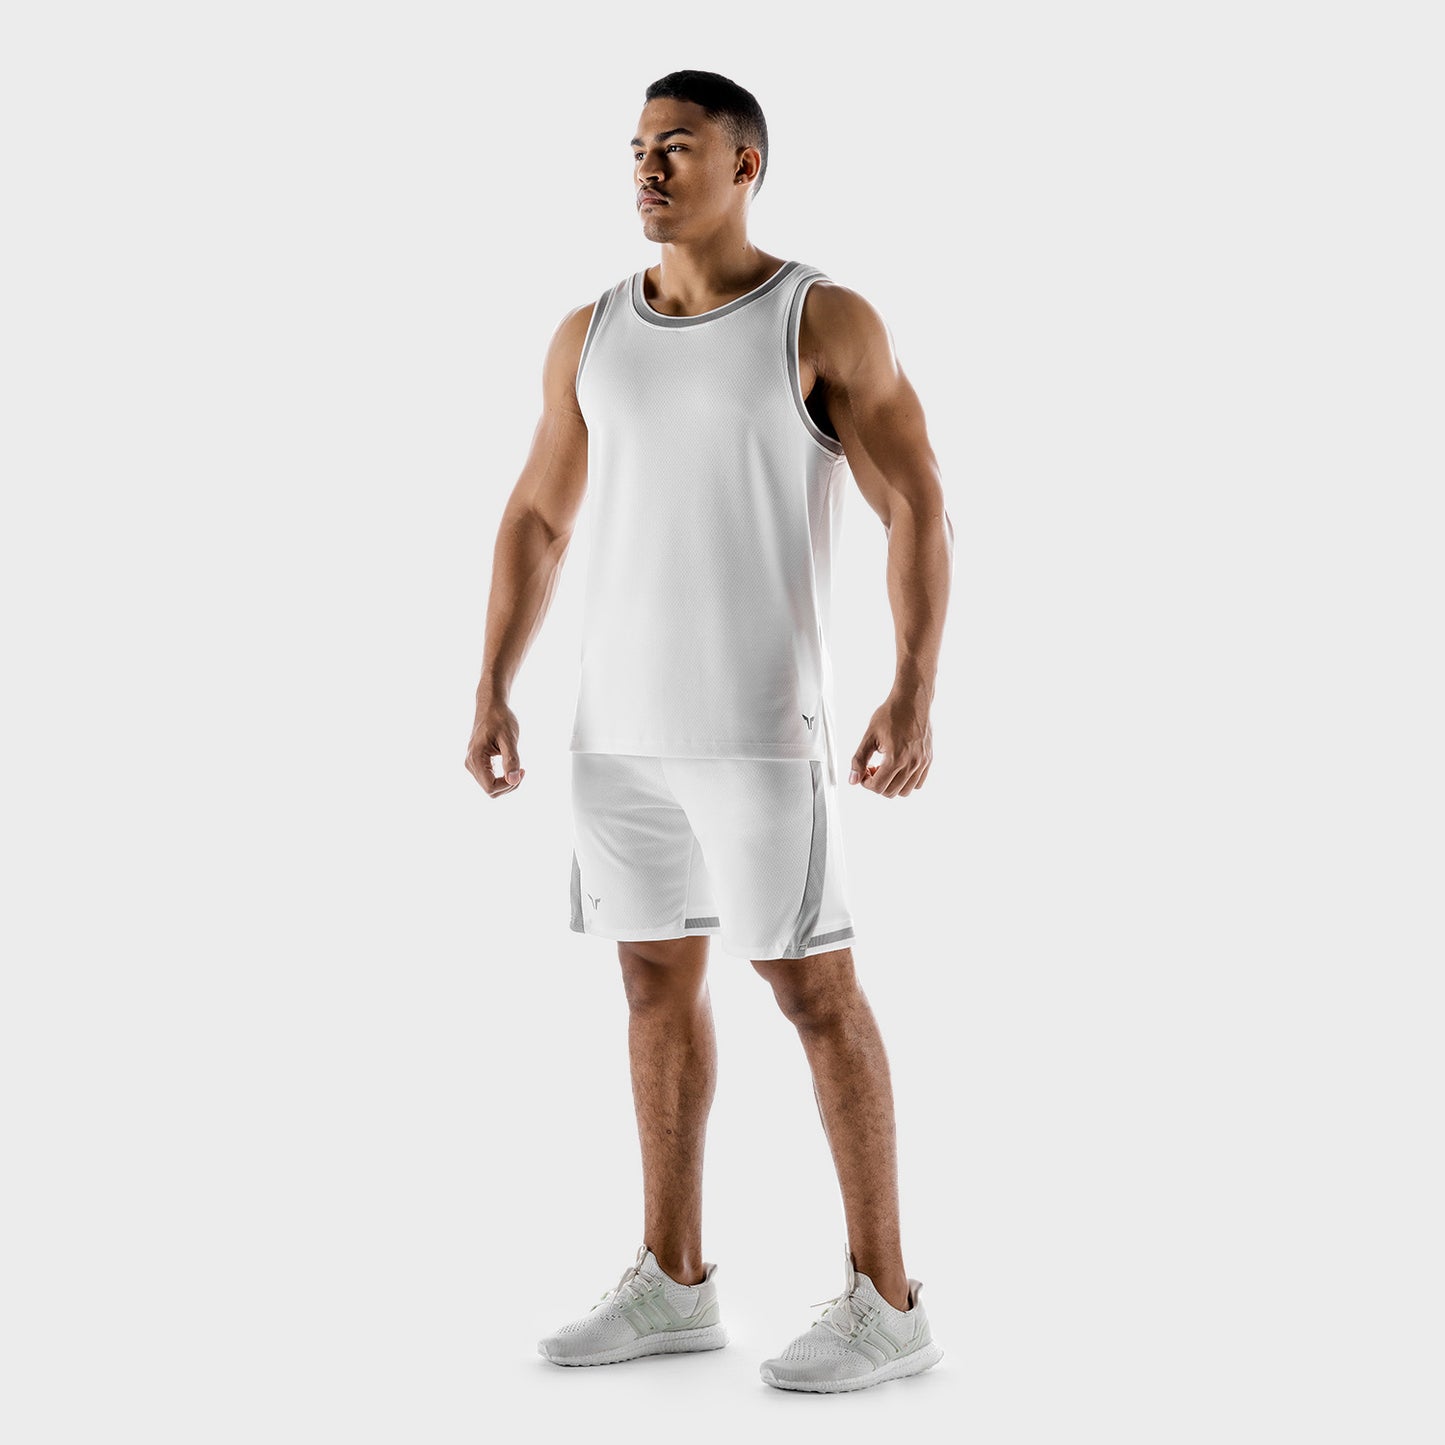 squatwolf-gym-wear-hybrid-2-0-tank-white-workout-tank-tops-for-men